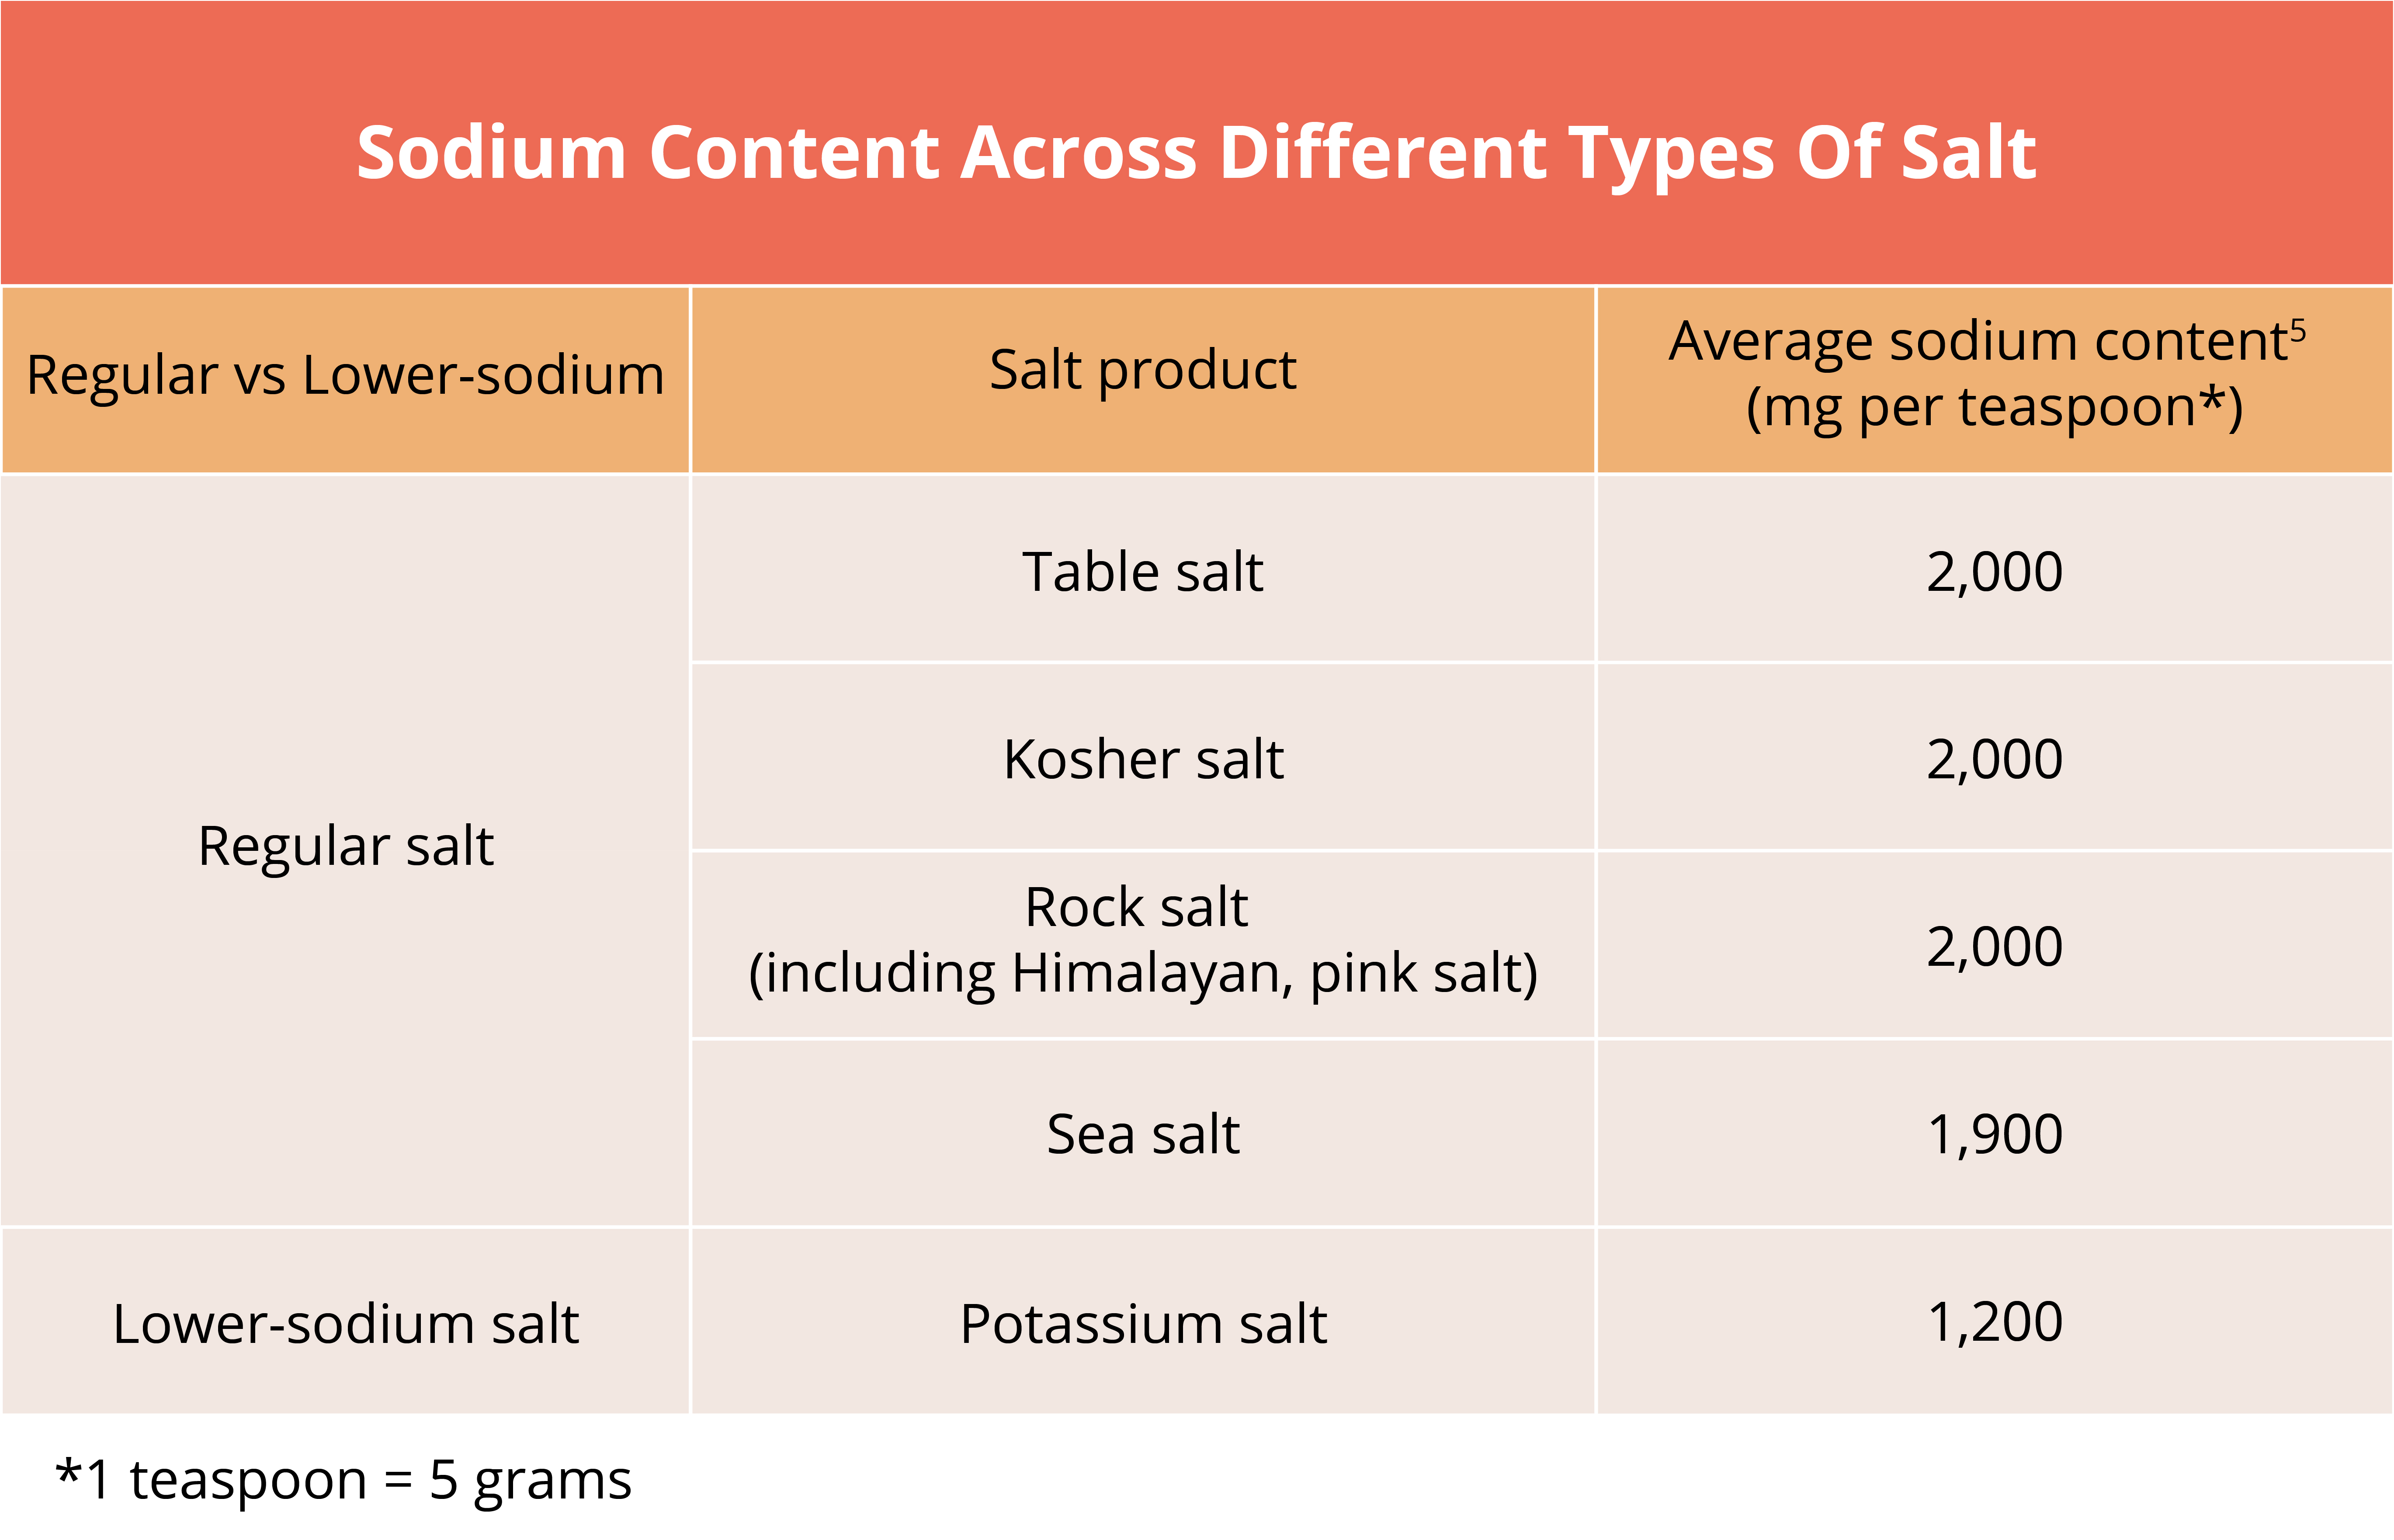 Sodium content across different types of salt